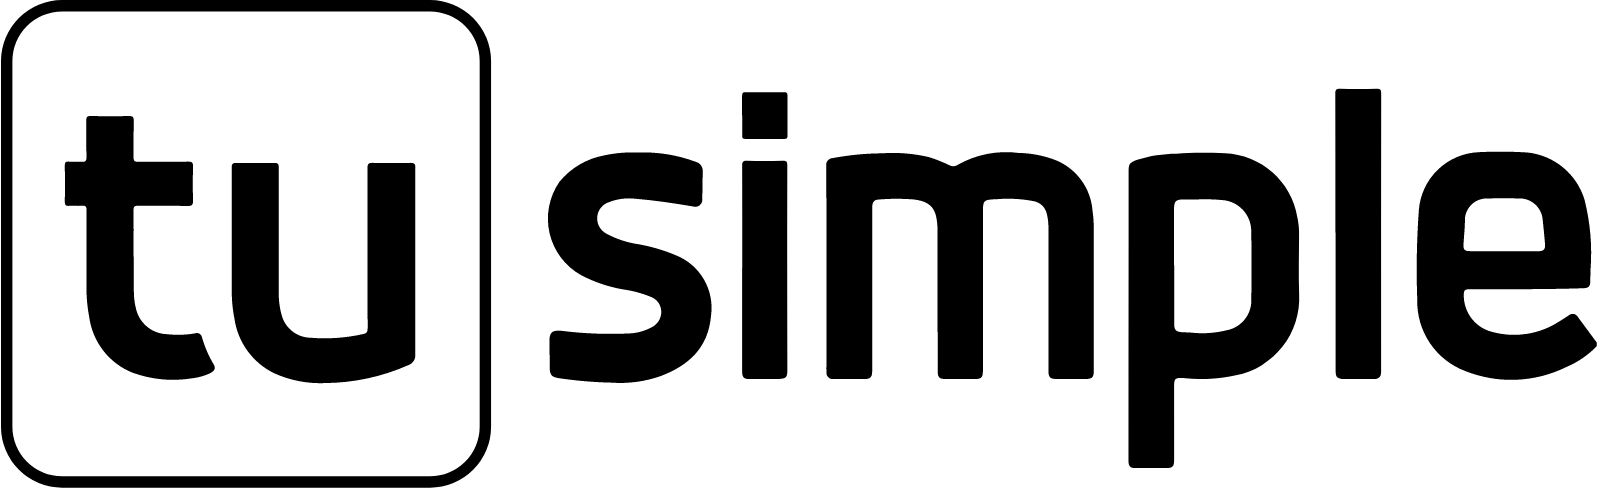 TuSimple logo large (transparent PNG)